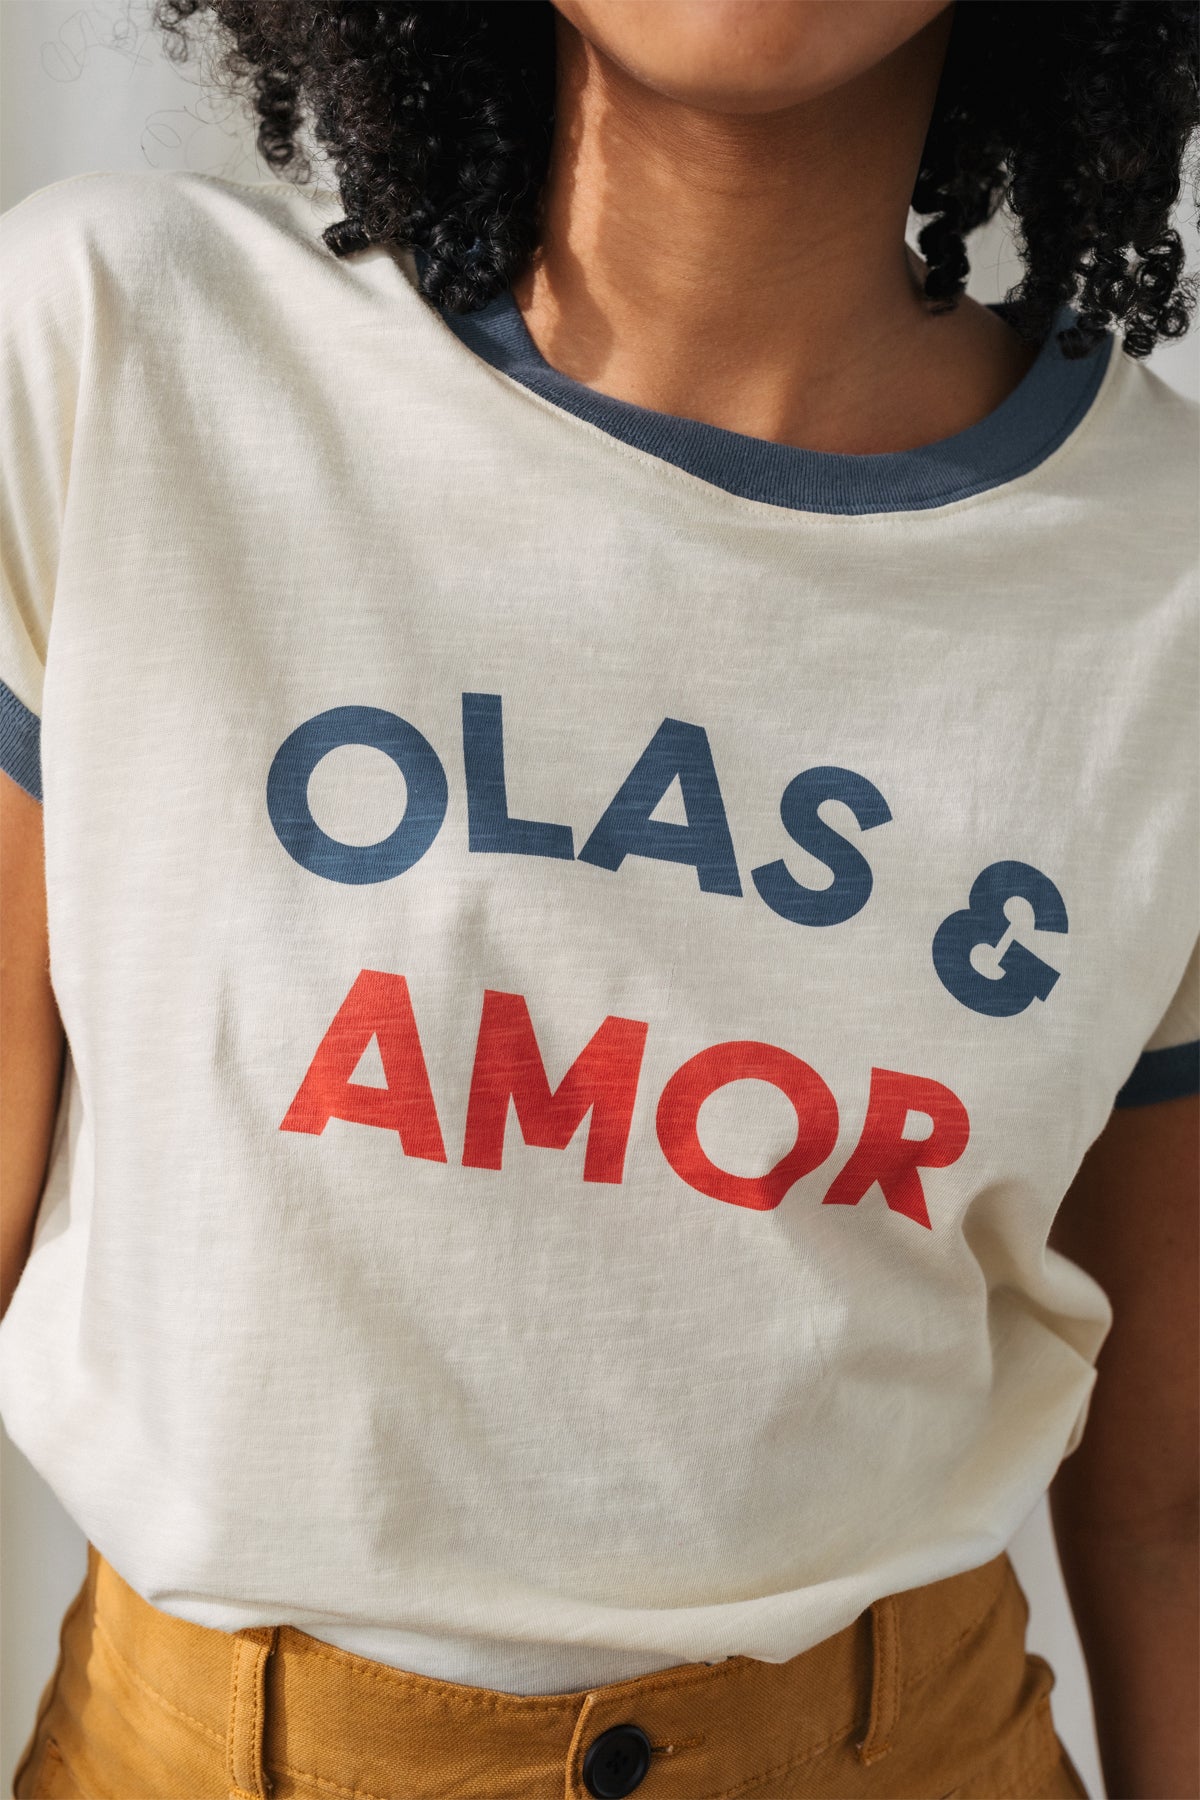 Chiesa - Olas & Amor